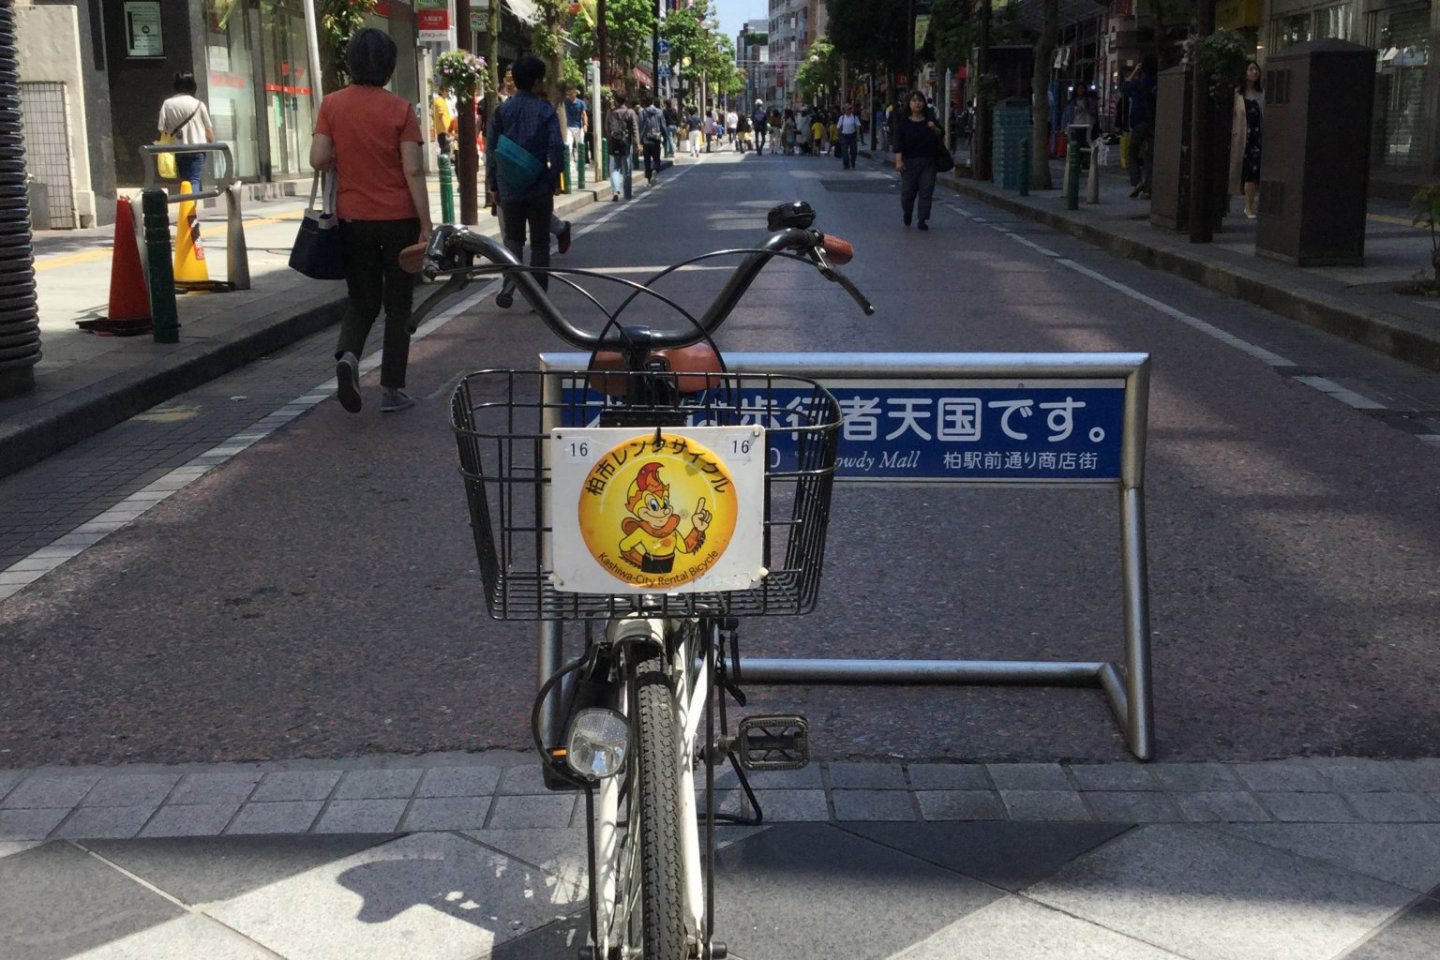 A Kashiwa City rental bike with the Reysol mascot on the basket